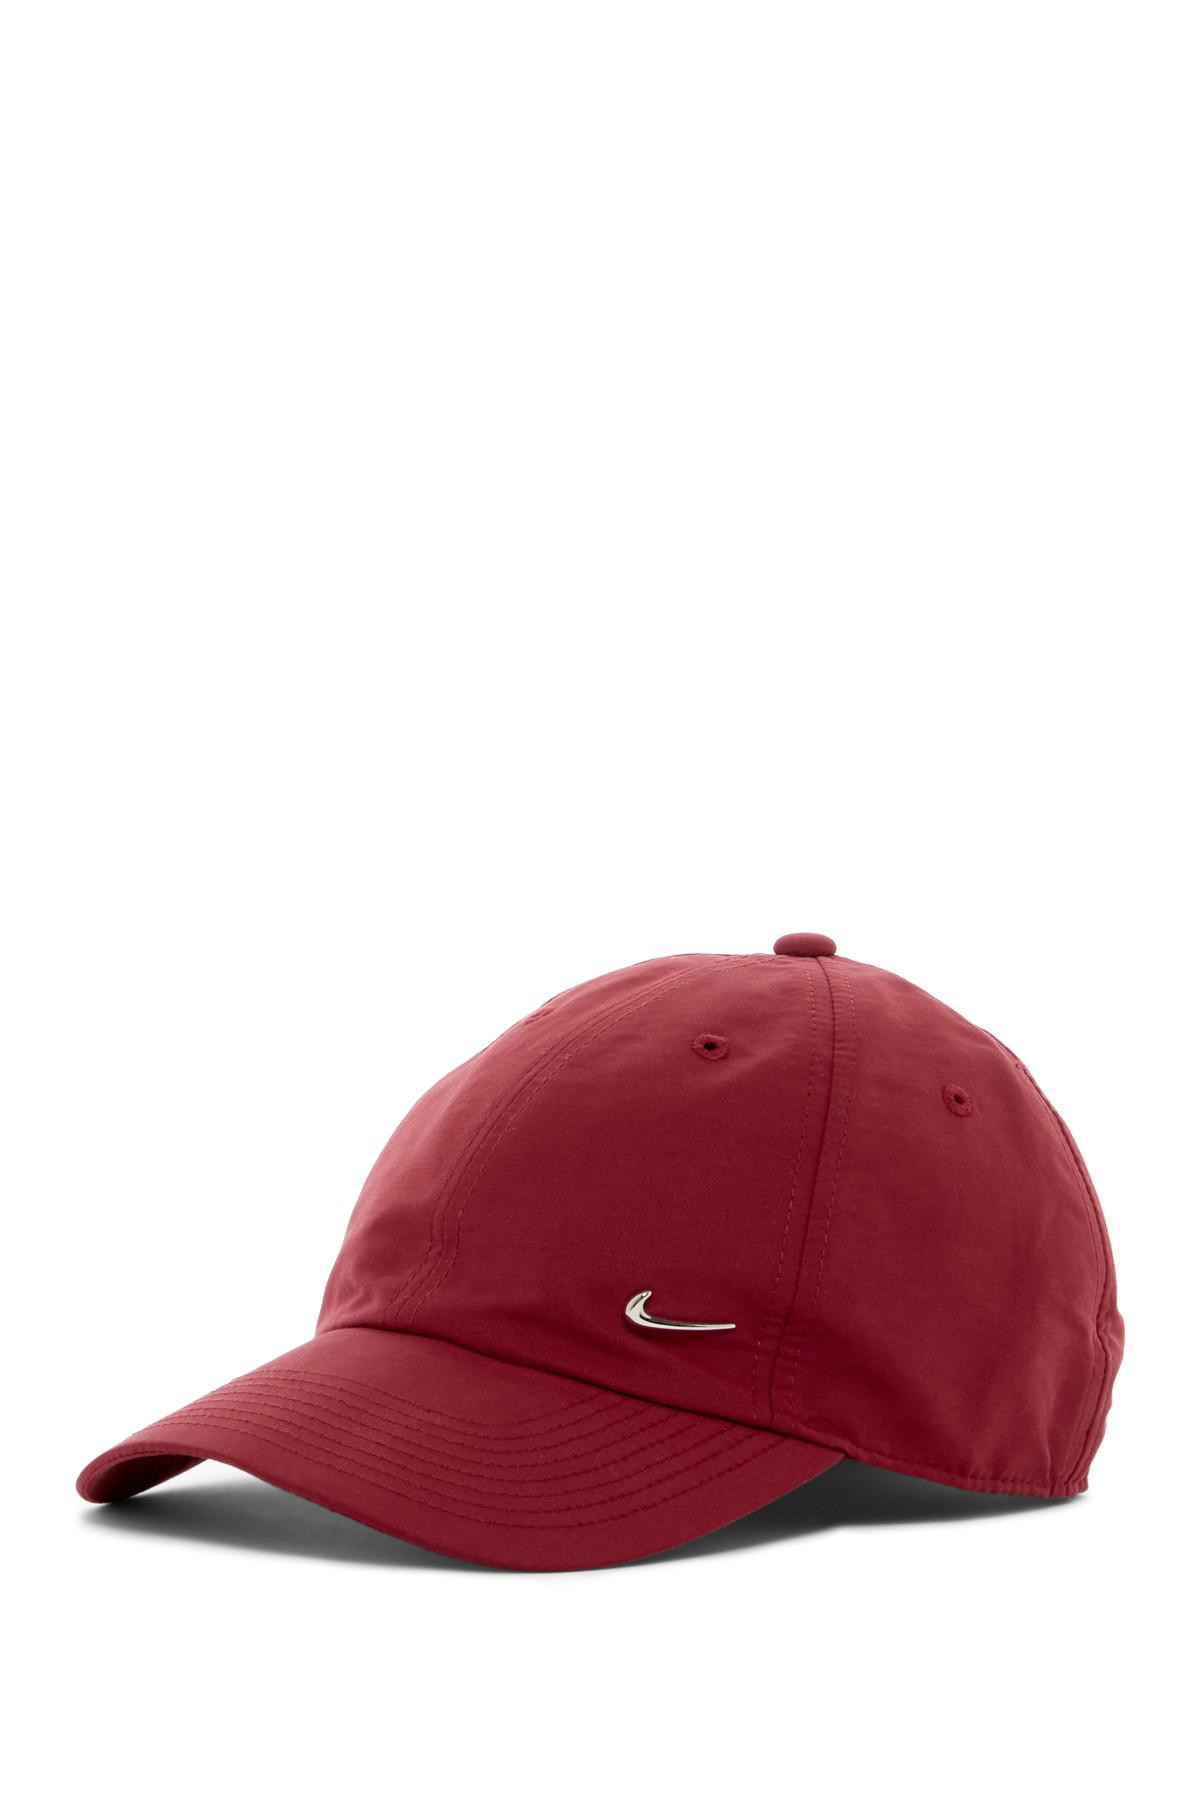 Nike Synthetic Metal Swoosh Cap in Red | Lyst